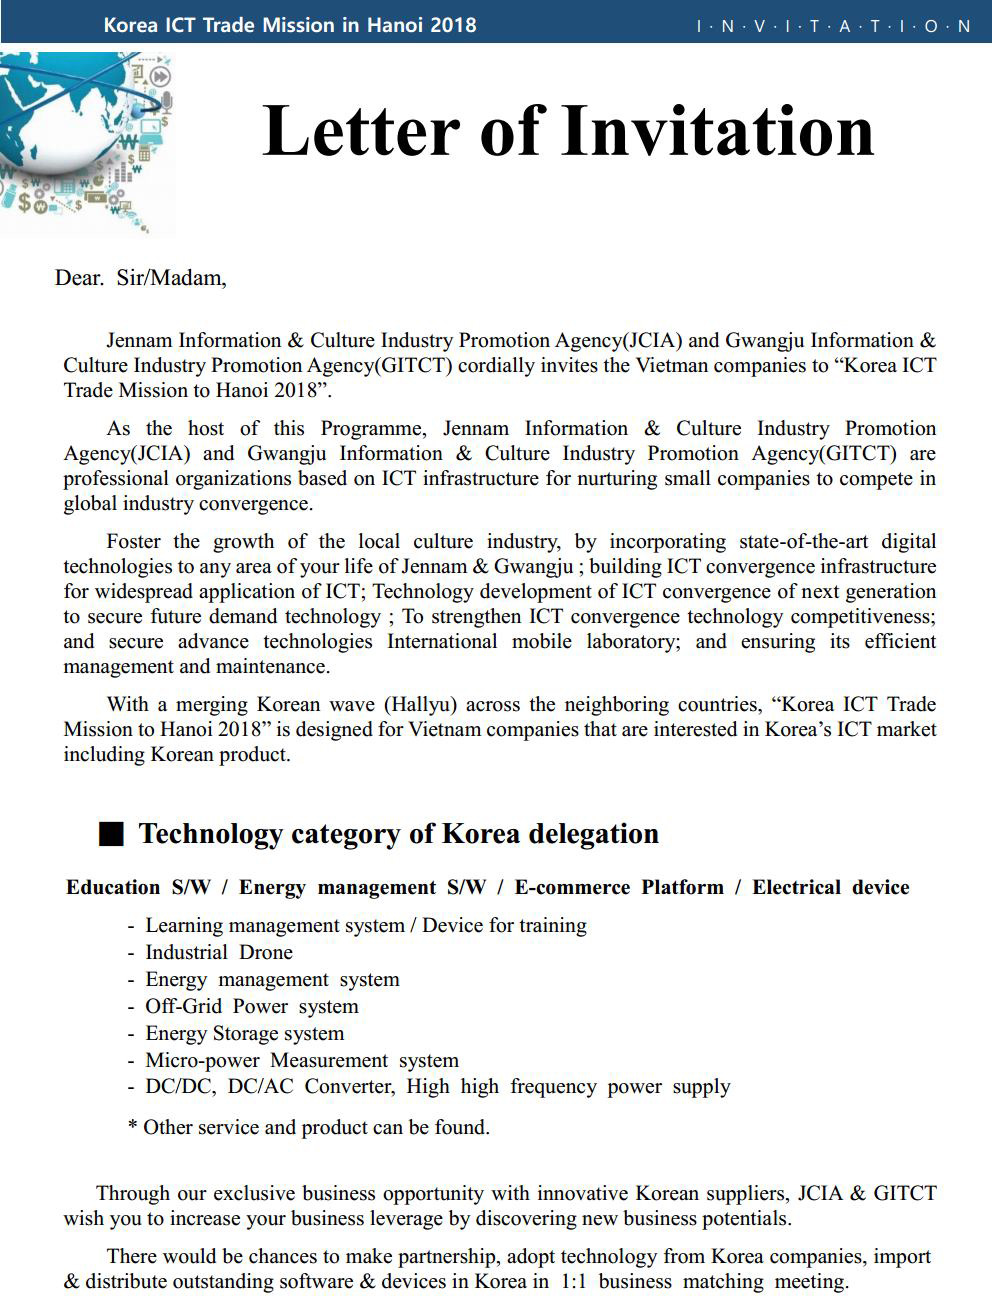 Invitation to "Korea ICT Trade Mission in Hanoi 2018"